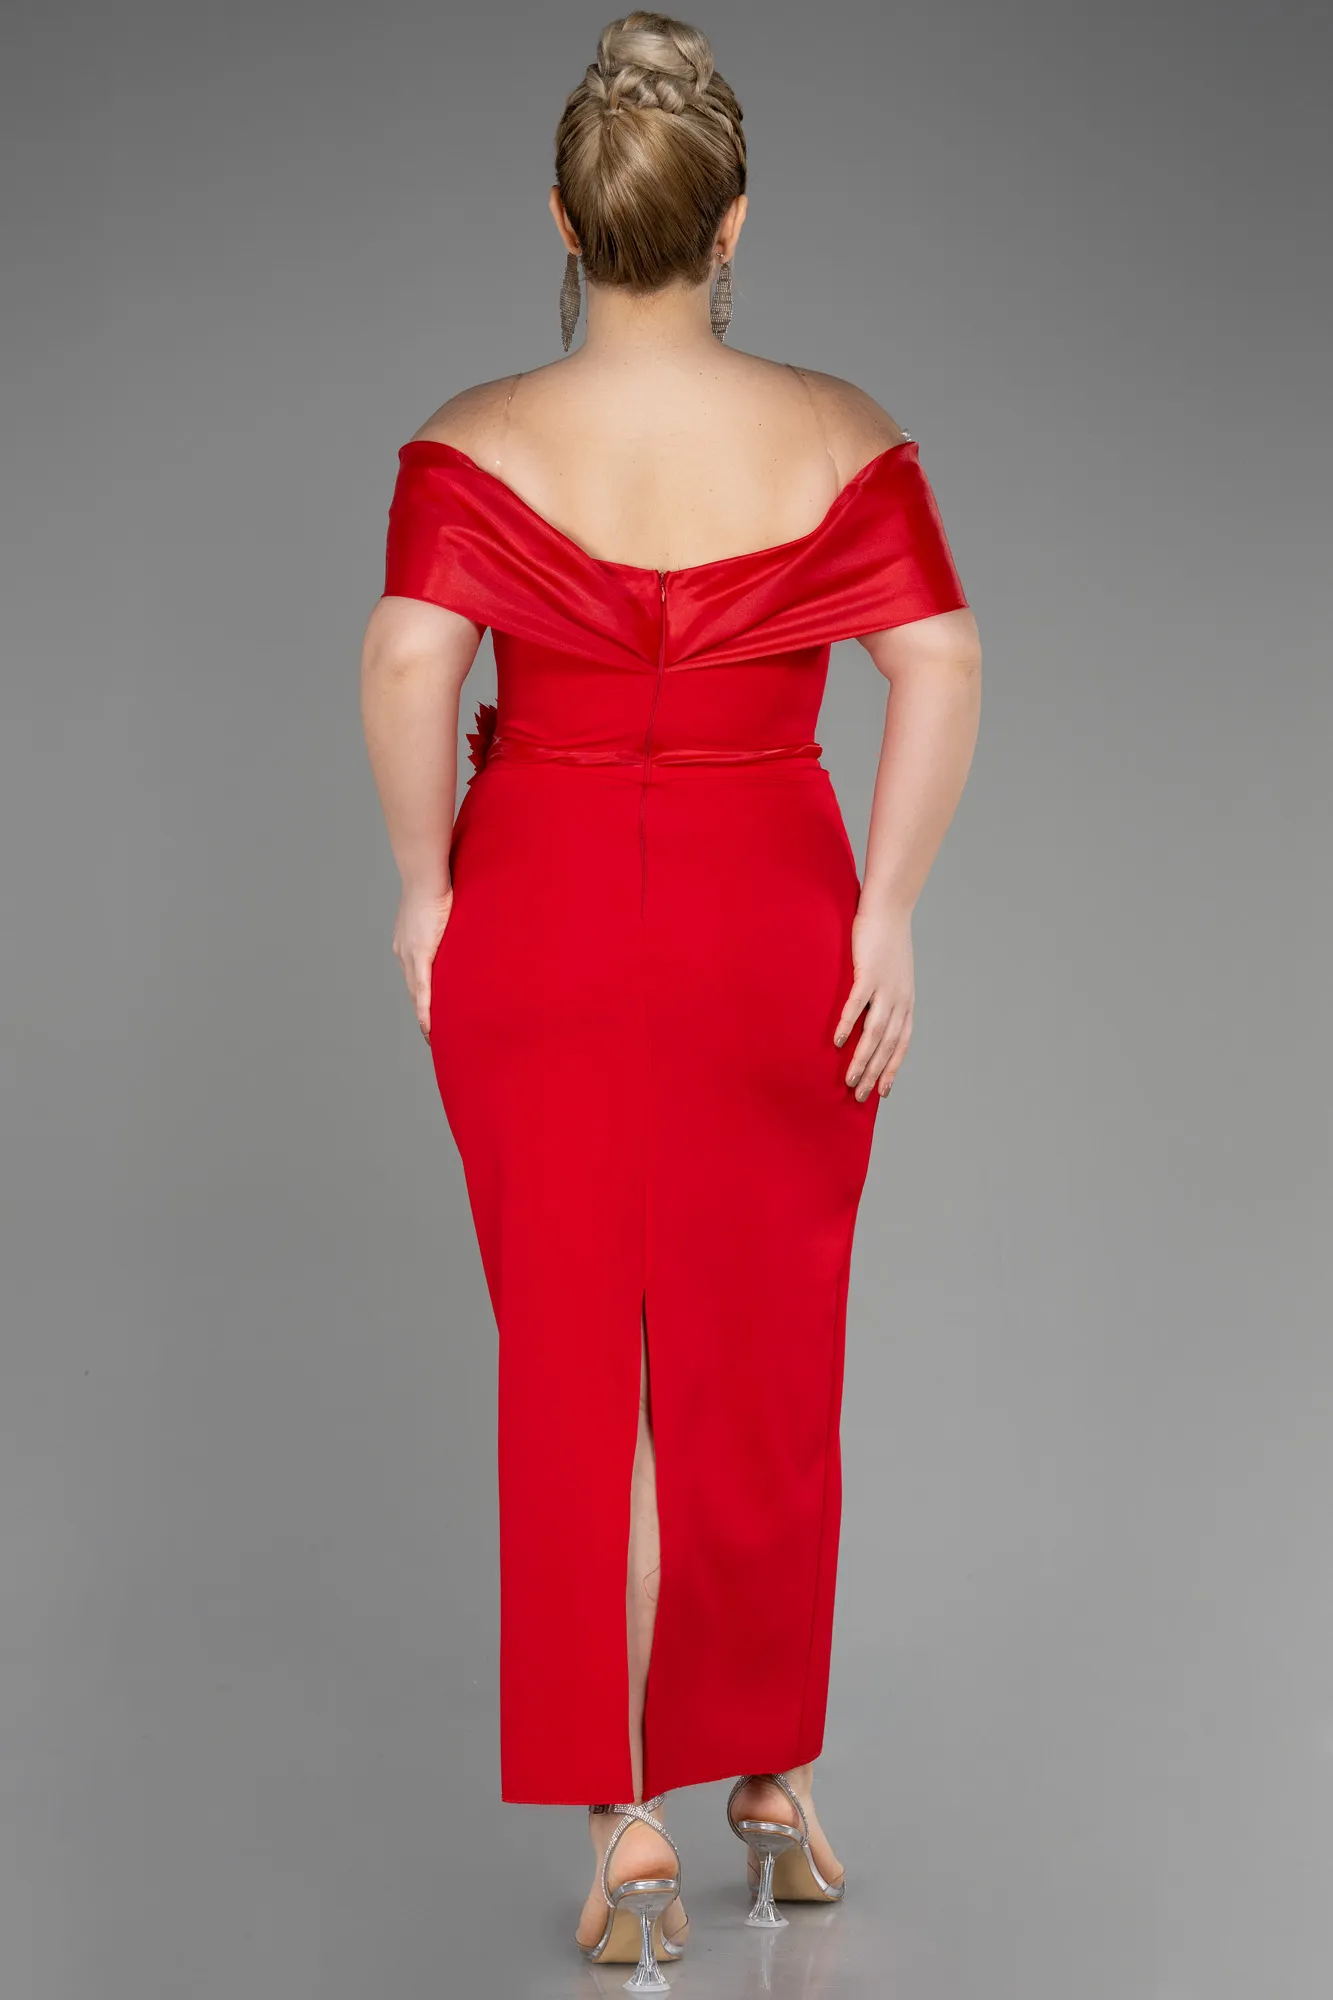 Red-Midi Plus Size Cocktail Dress ABK2015